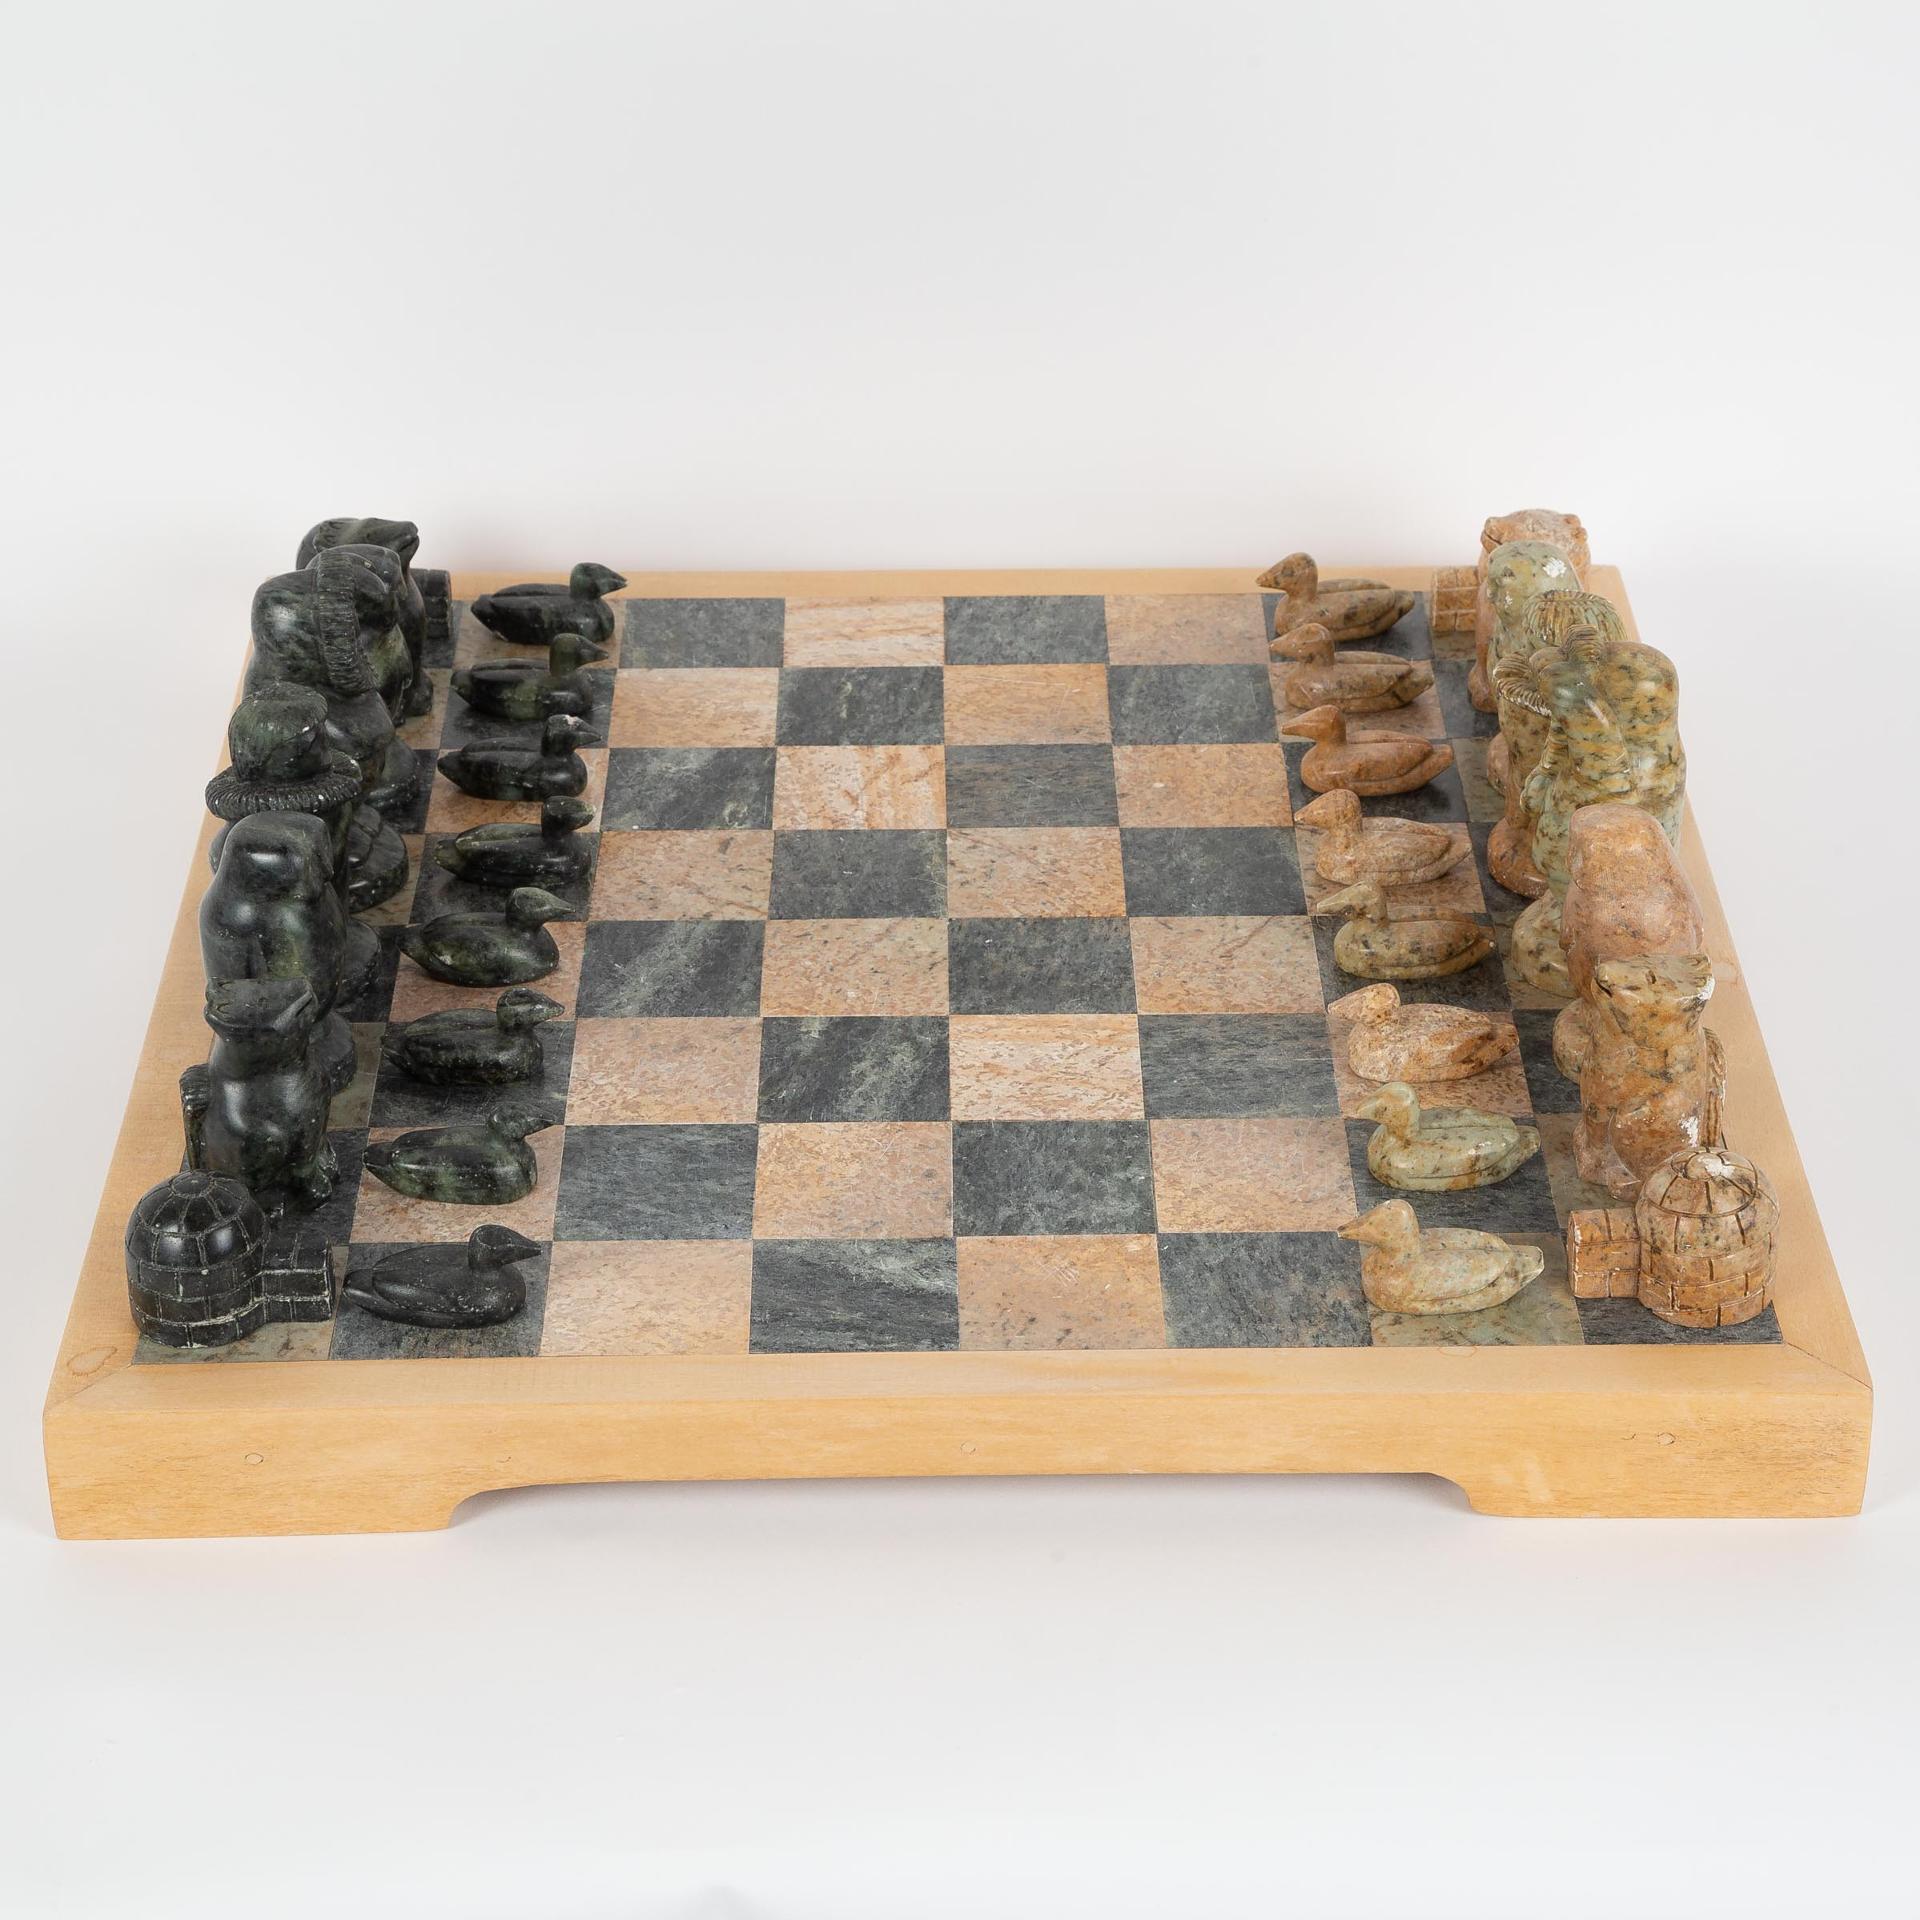 Fred Iyak Trimble (1961) - Chess Set